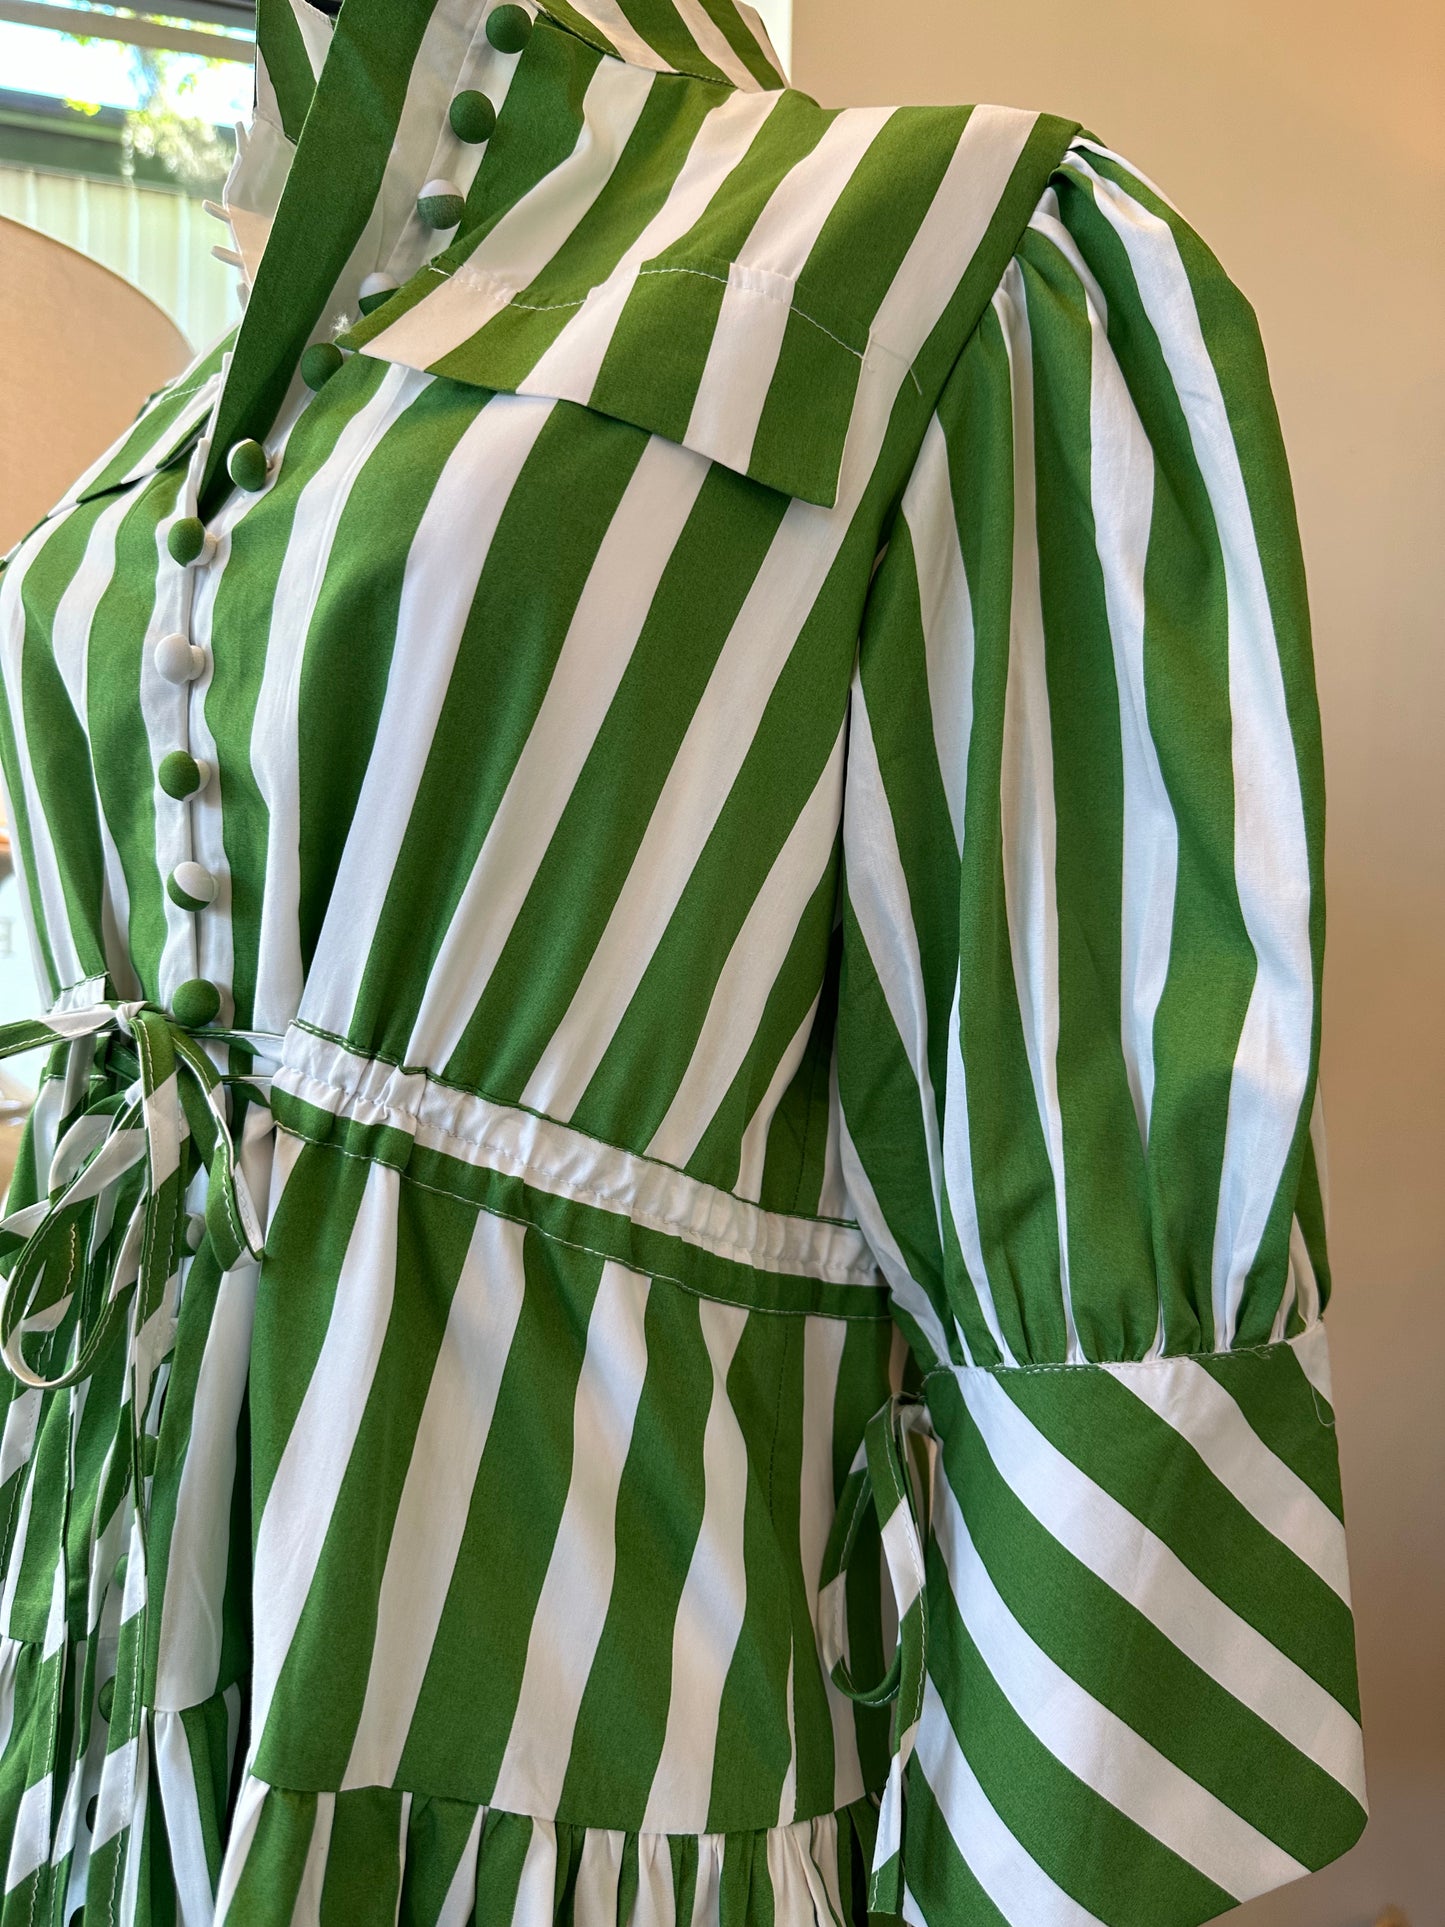 Green Stripe Shirt Dress